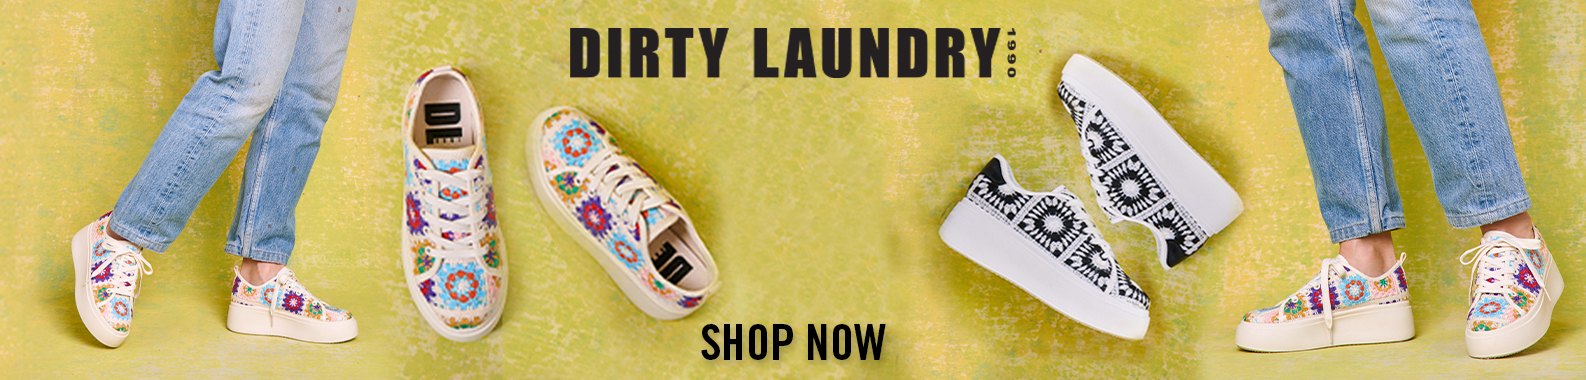 Dirty Laundry brand header image